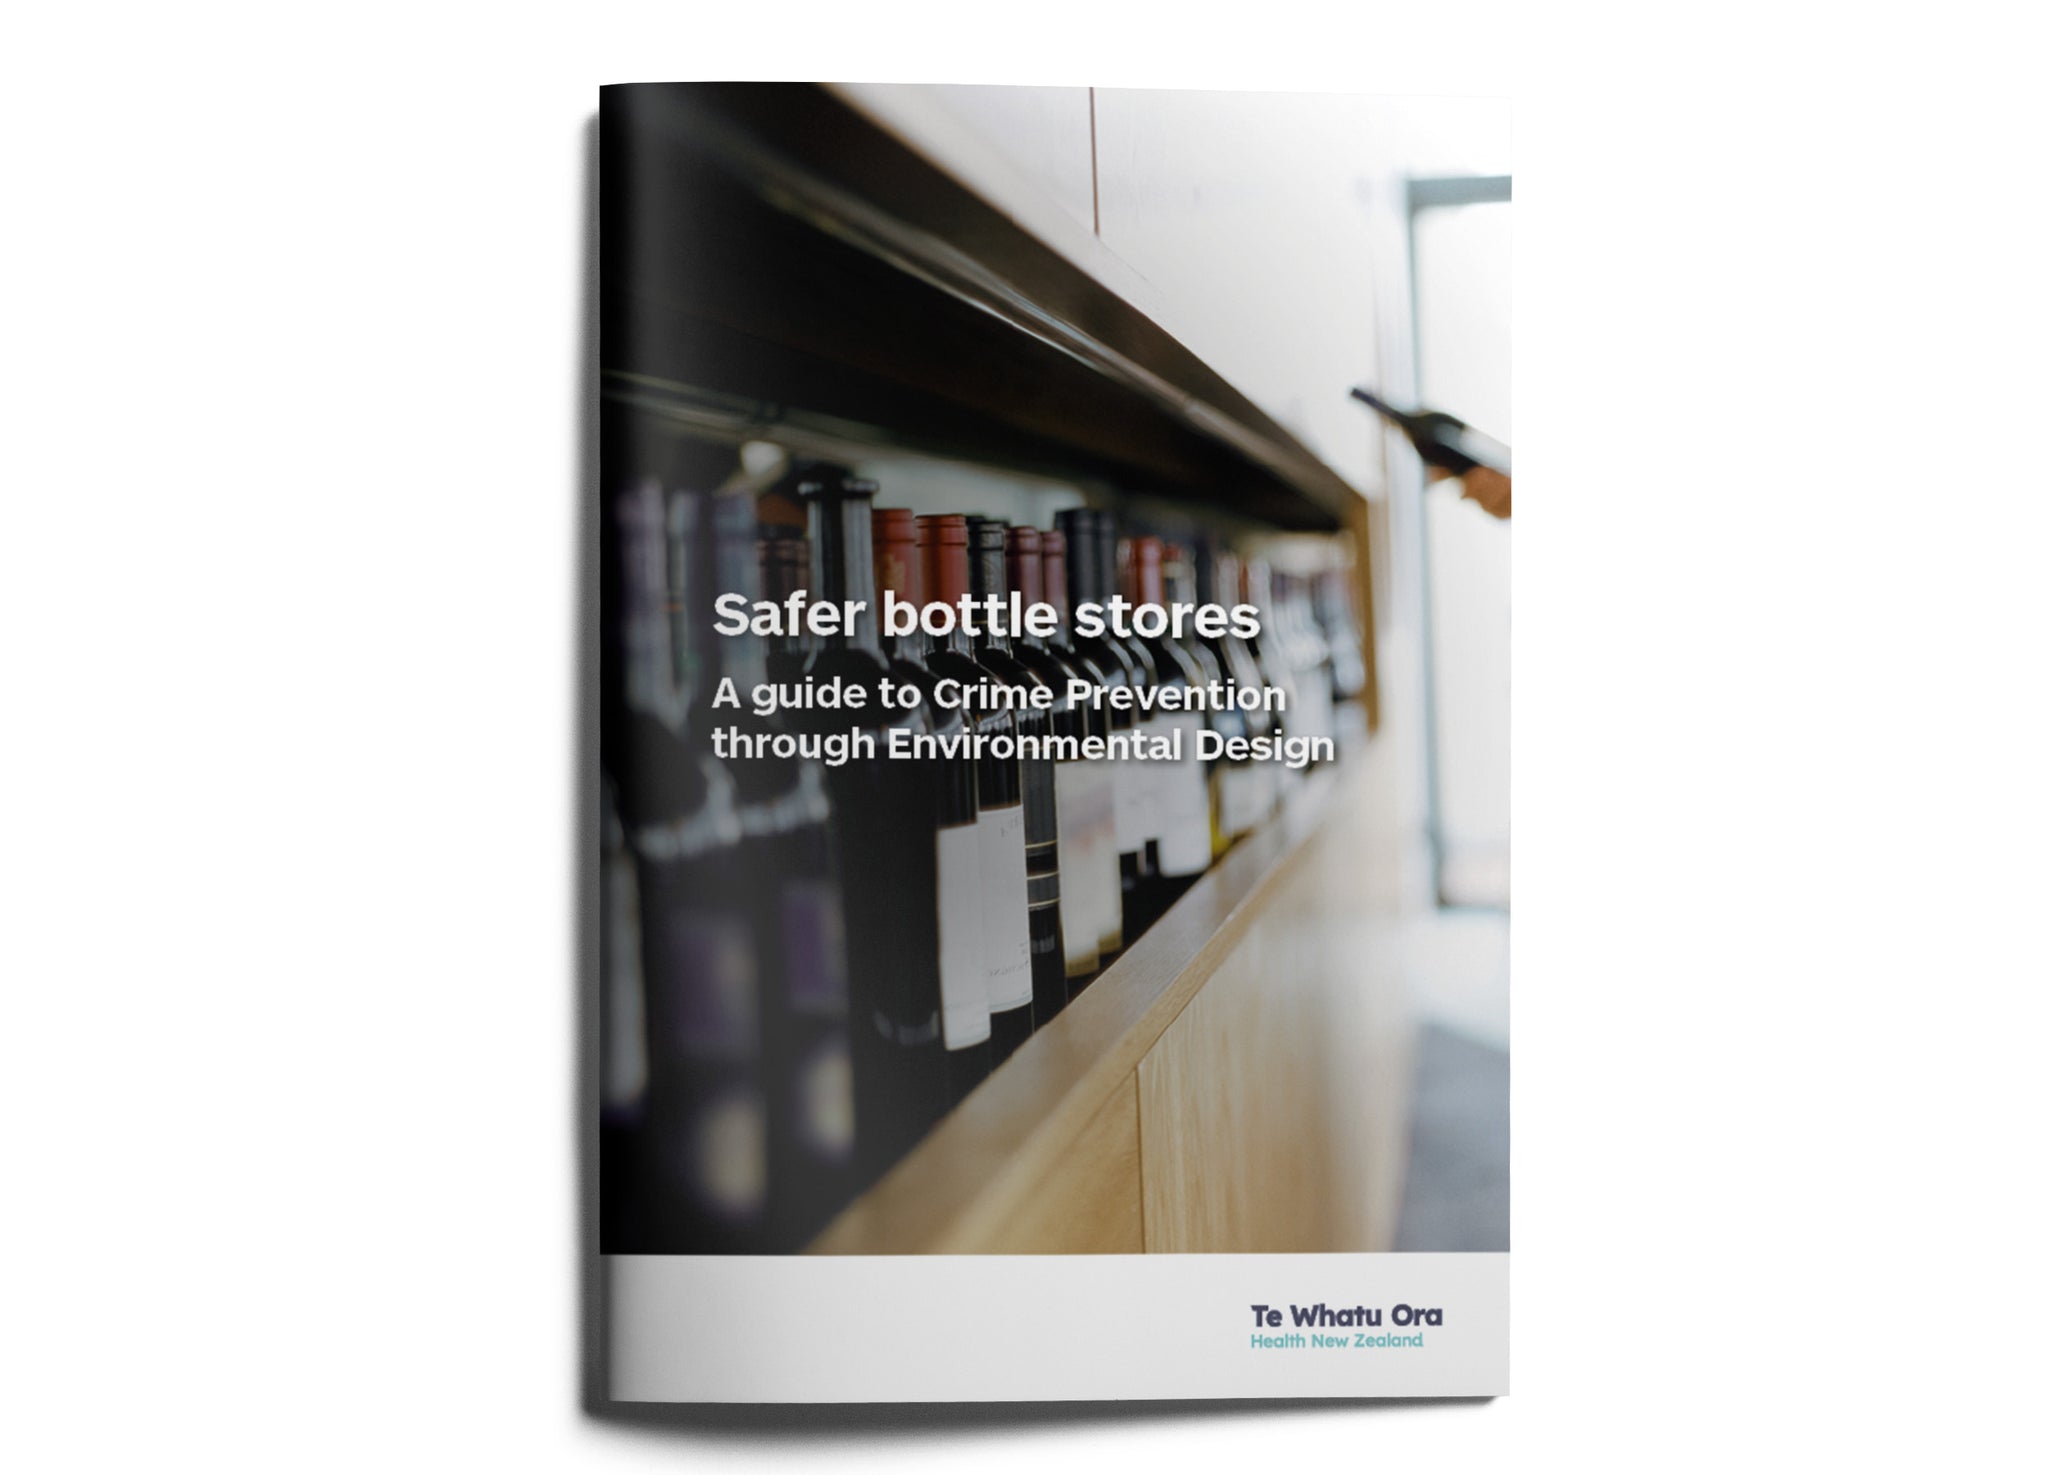 Safer bottle stores - A guide to Crime Prevention through Environmental Design